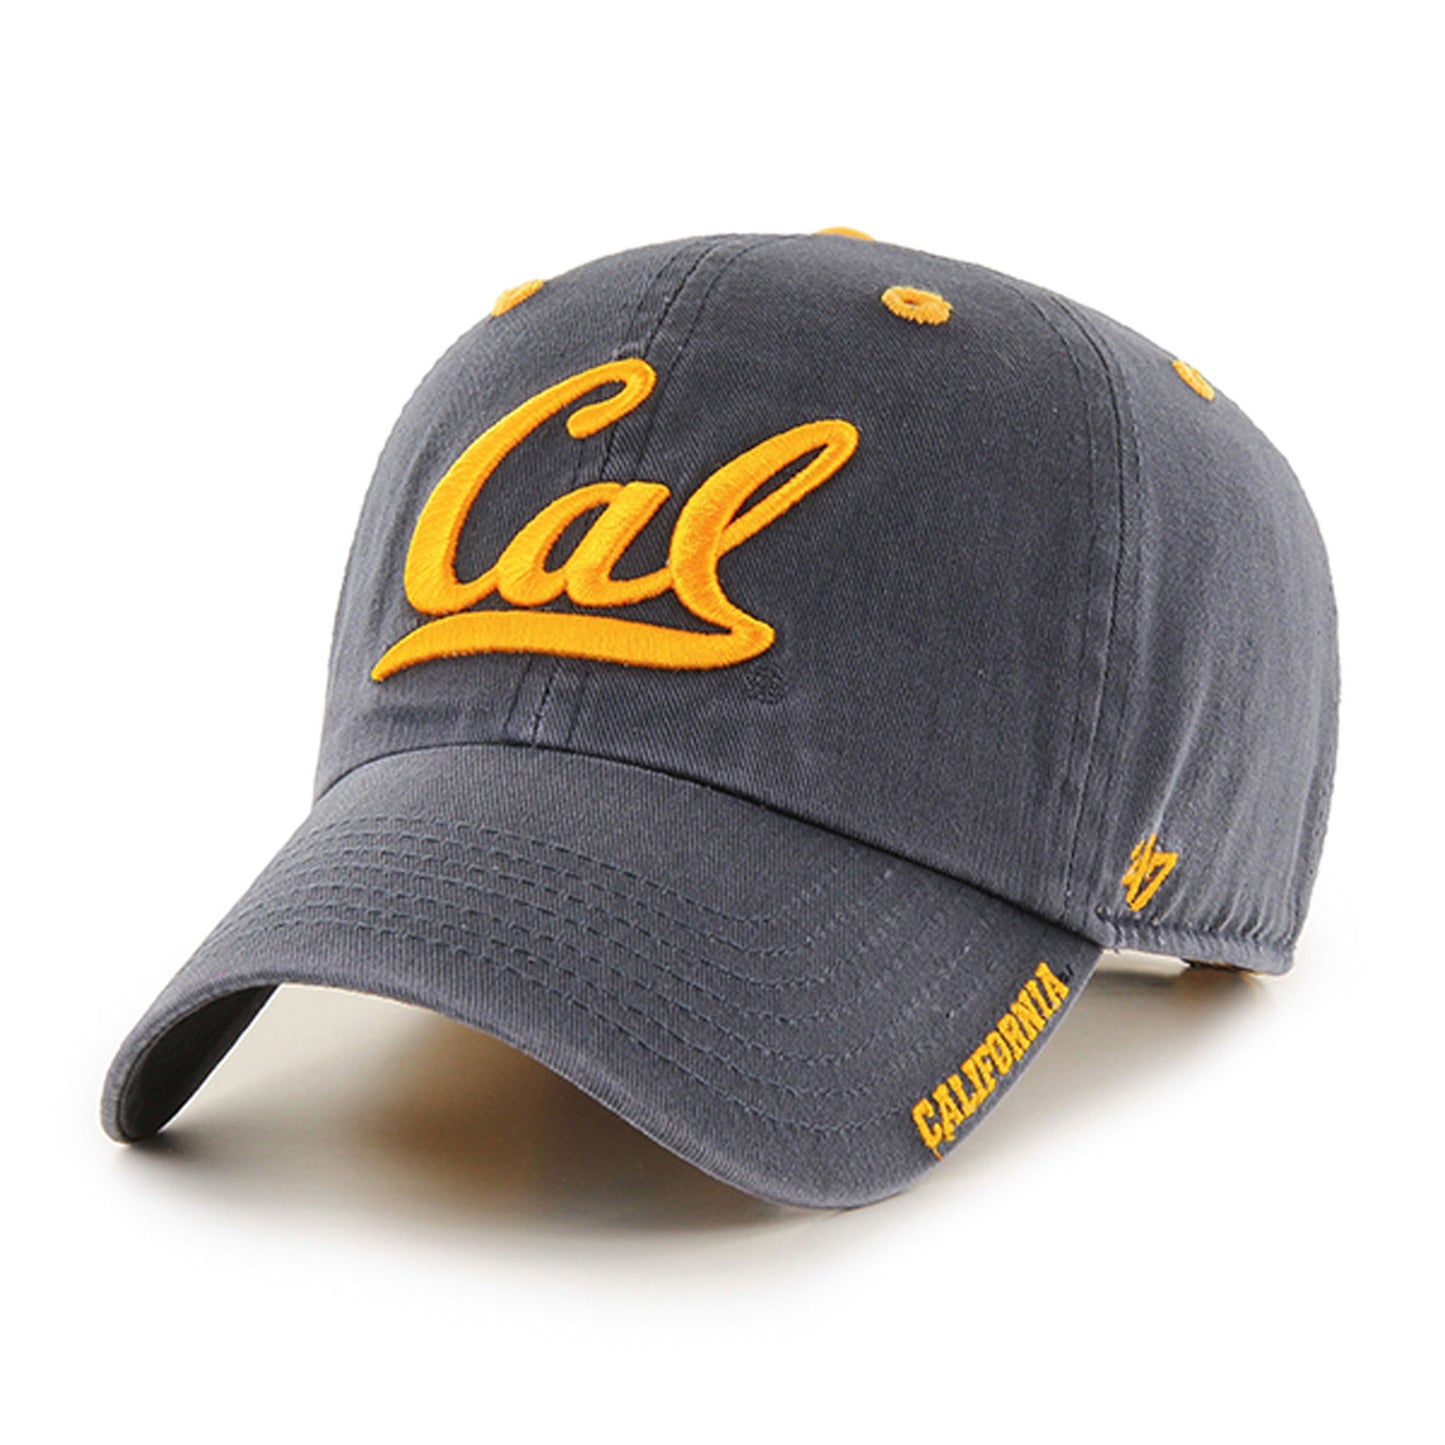 U.C. Berkeley Cal Vintage adjustable hat-Navy-Shop College Wear